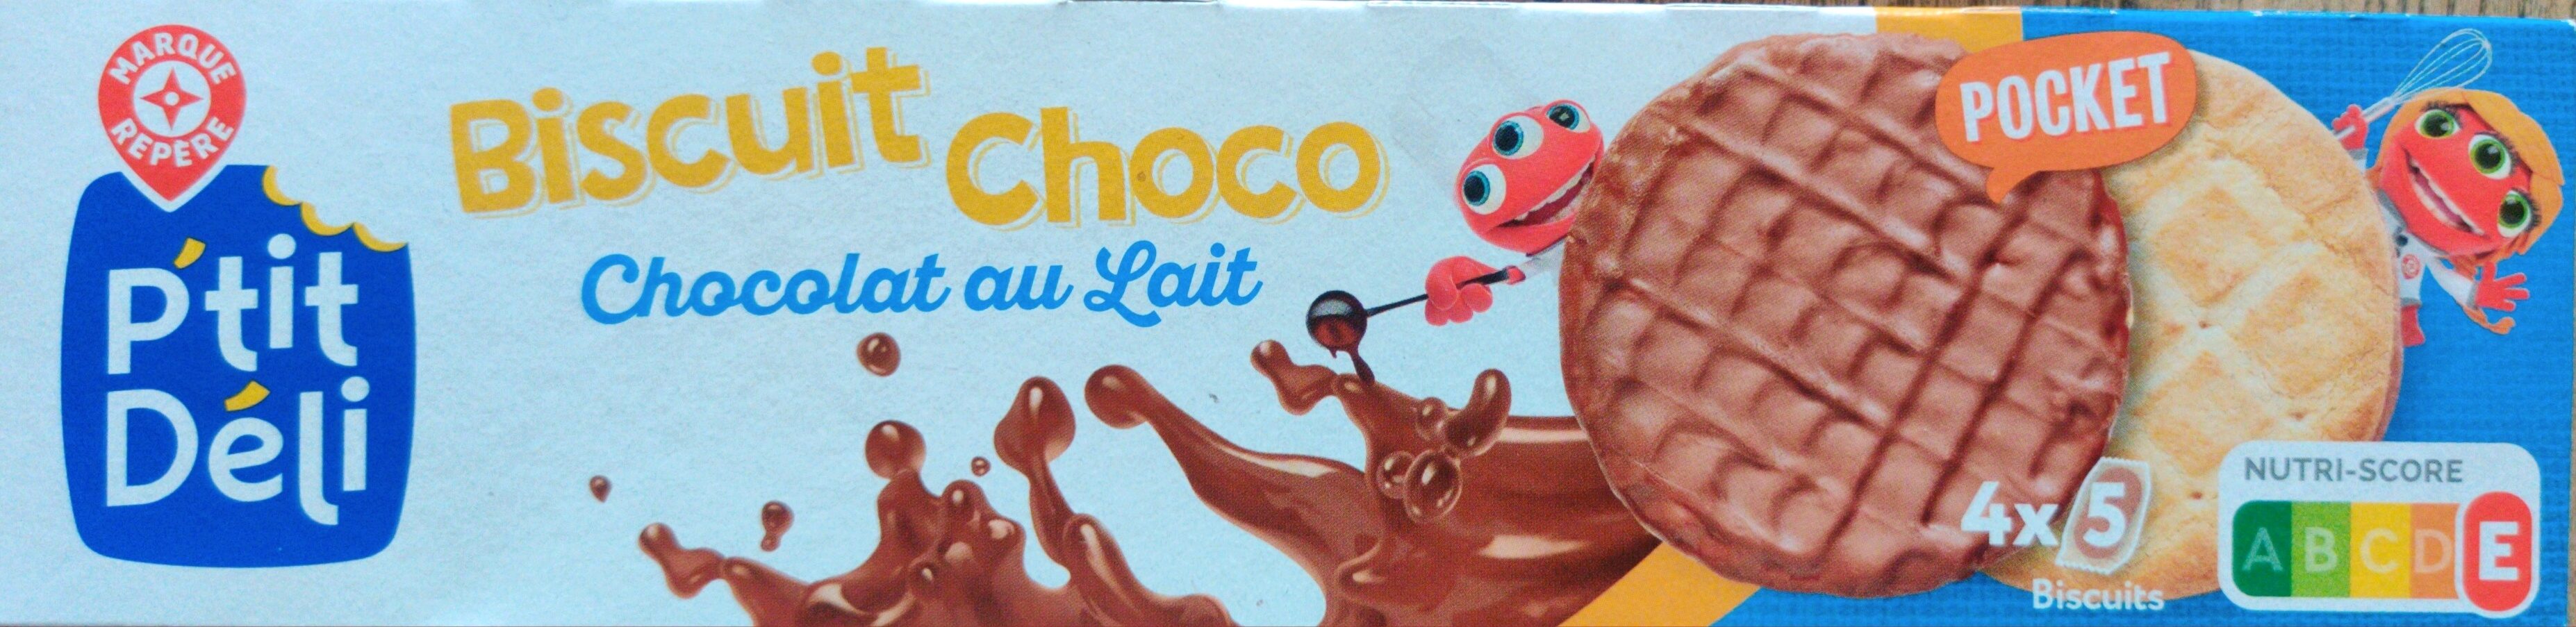 Biscuit Choco Chocolat au Lait - Produkt - fr